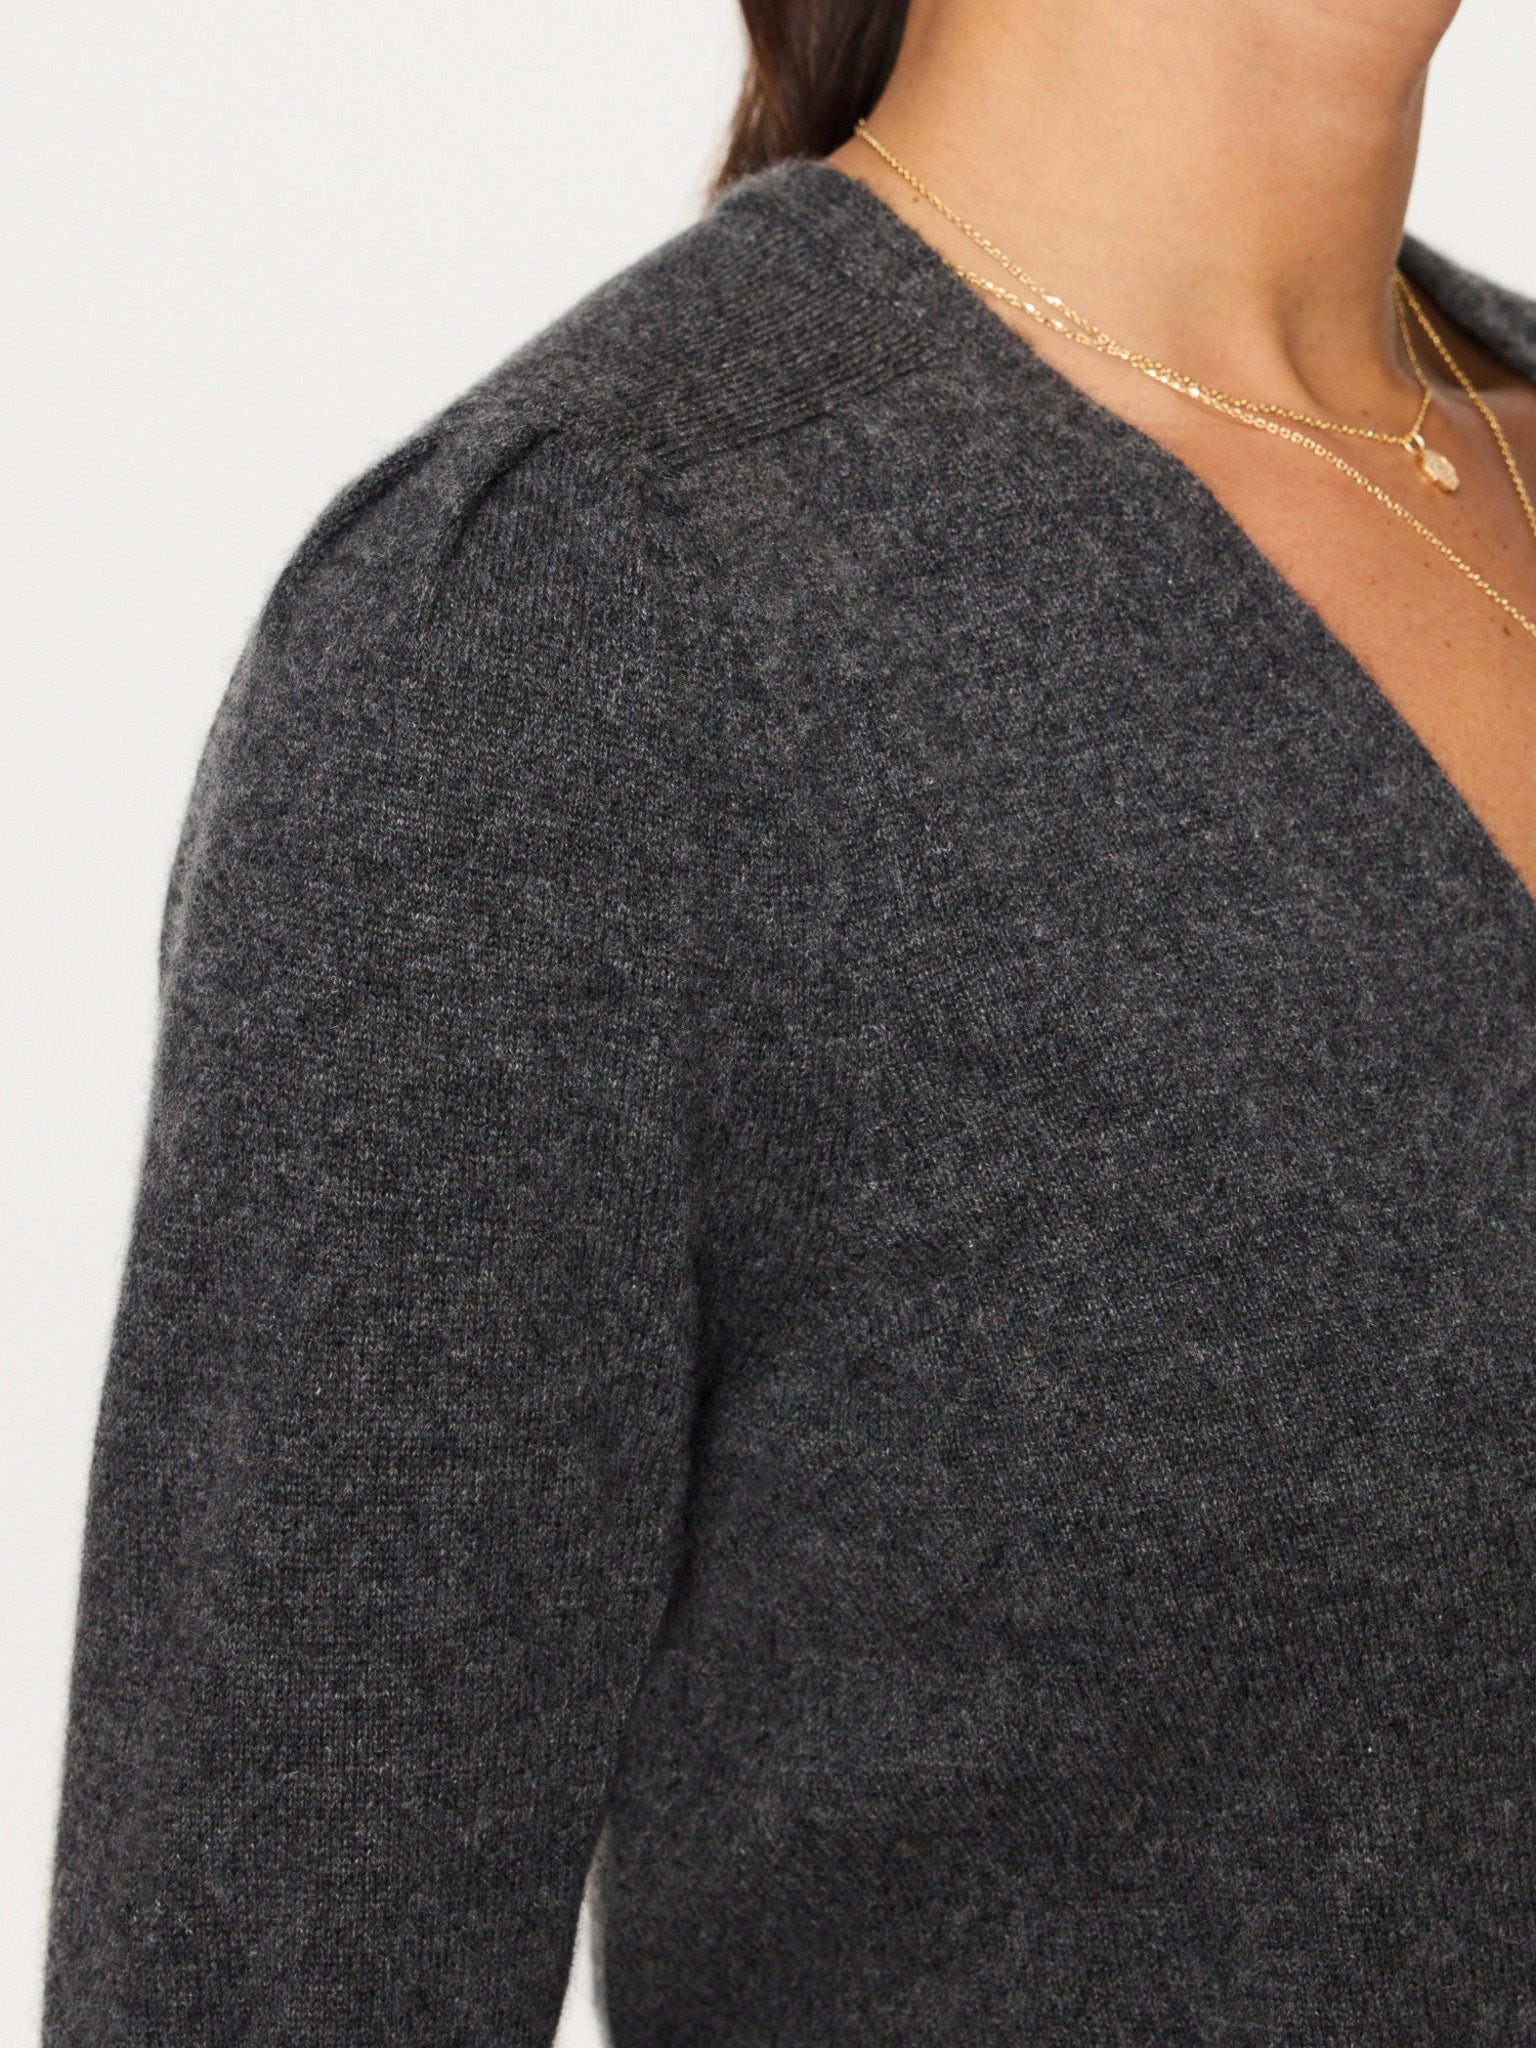 Finn cashmere v-neck gray wrap sweater close up